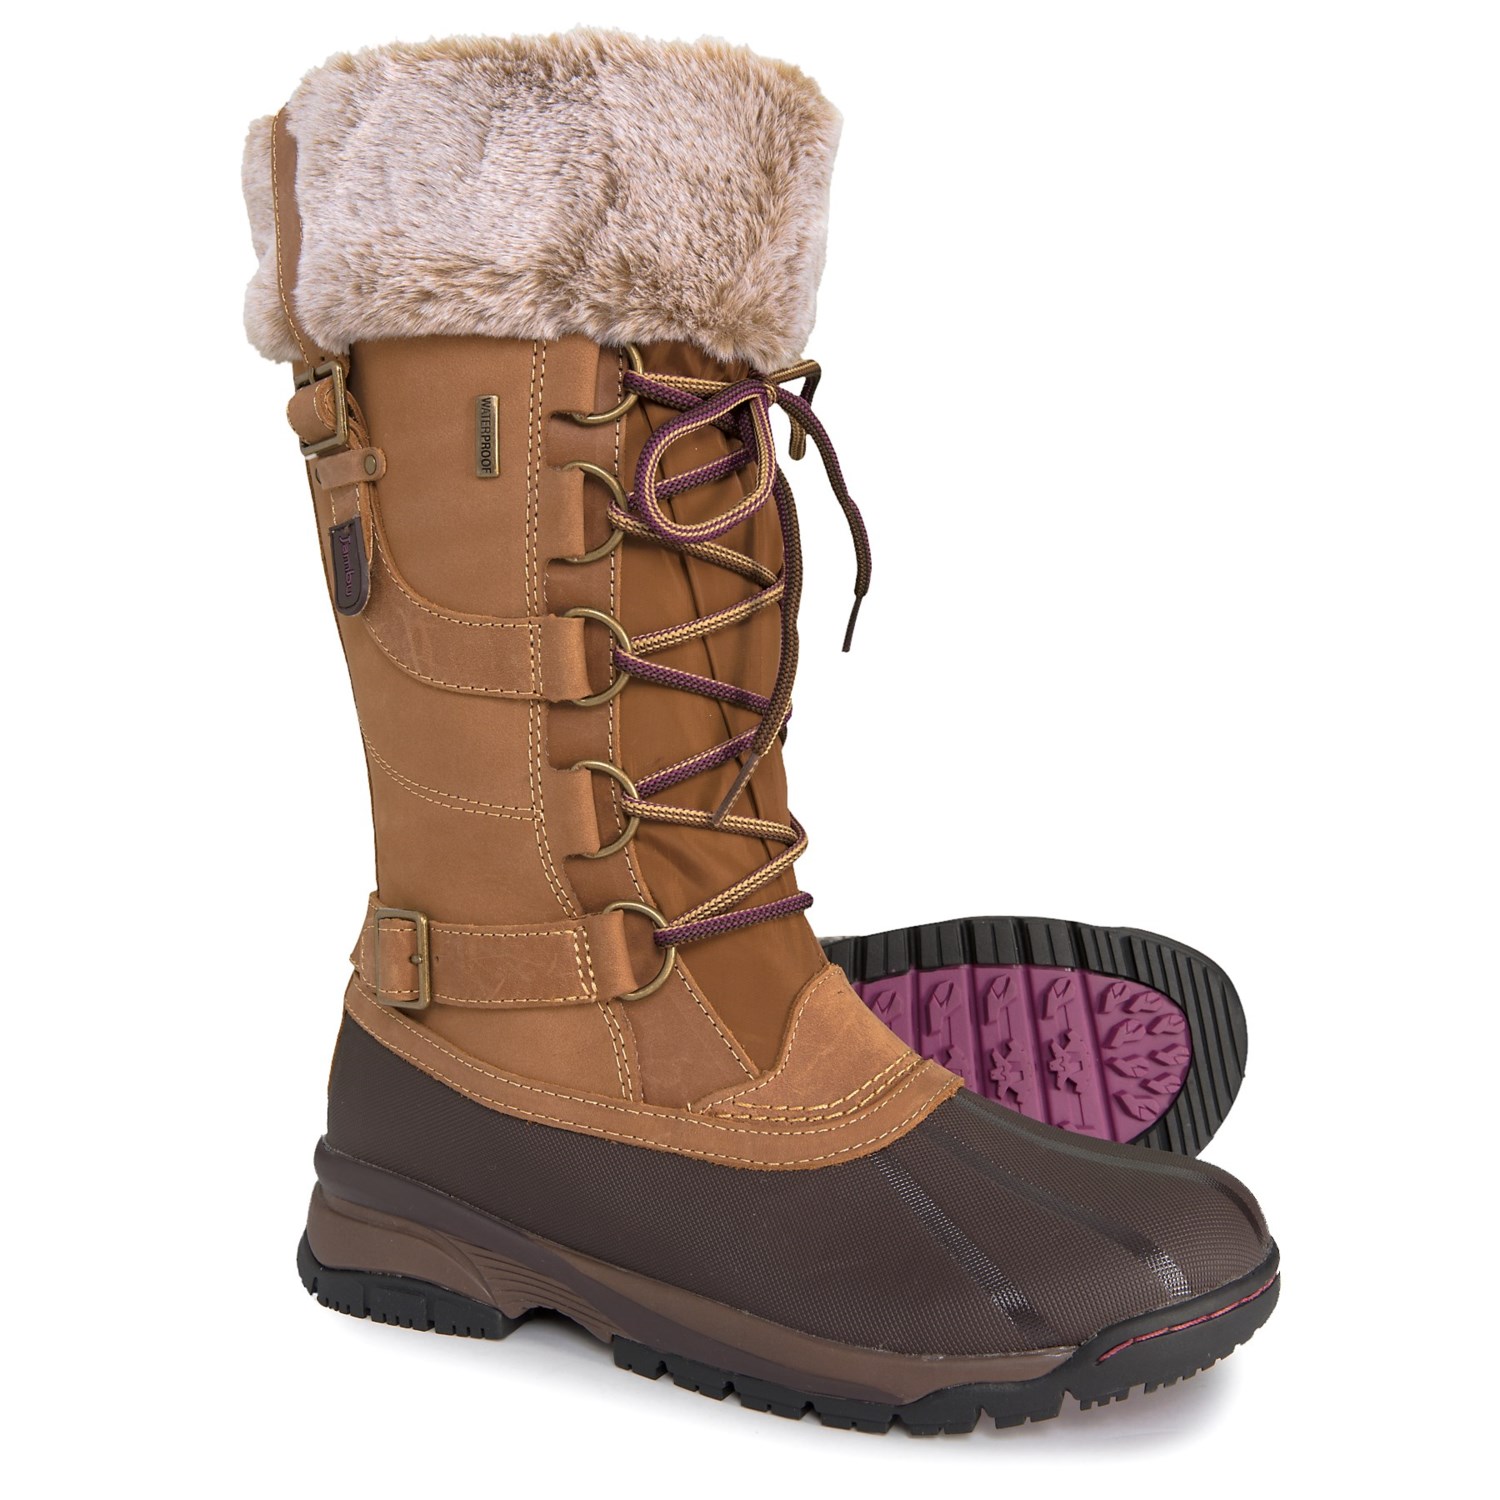 Jambu Wisconsin Tall Pac Boots – Waterproof, Insulated (For Women)